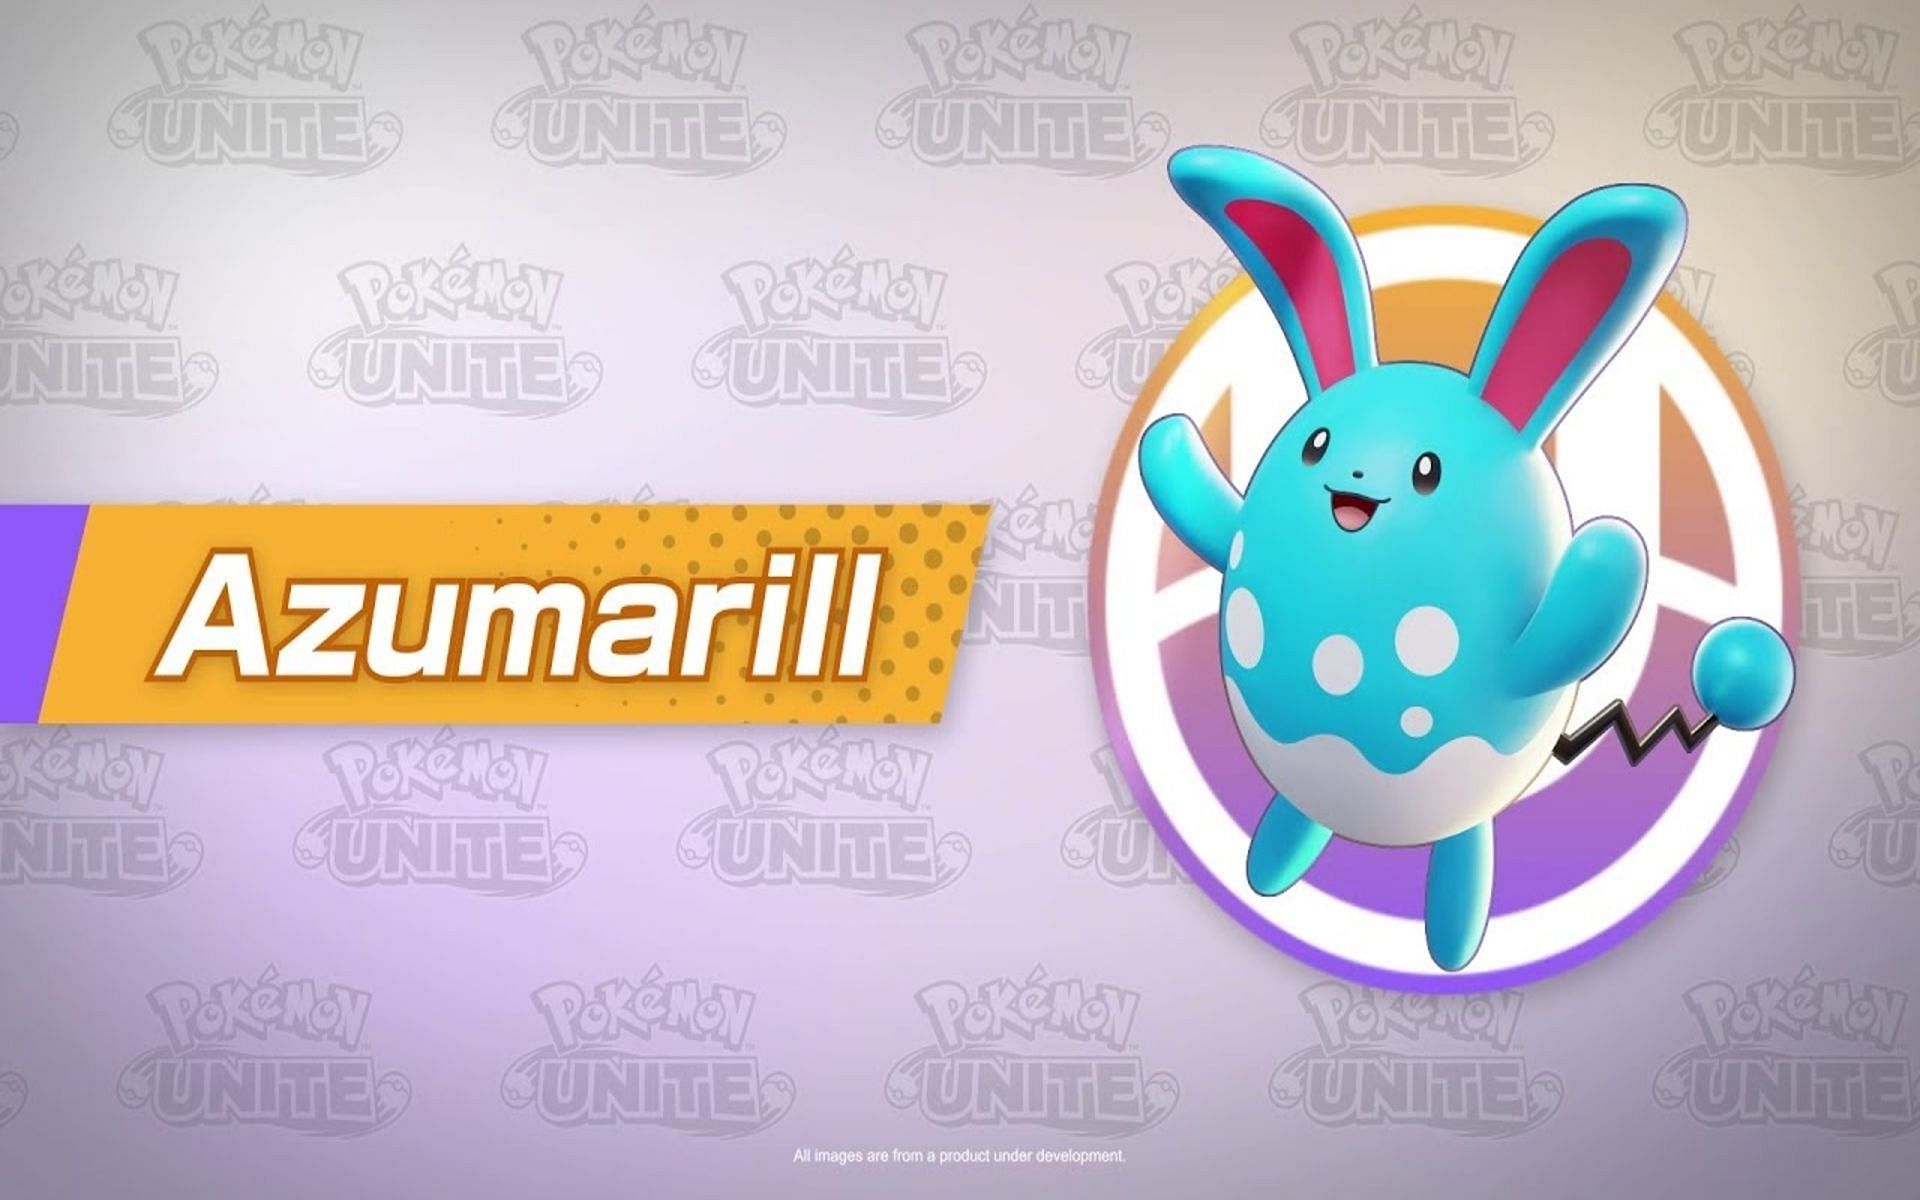 Azumarill will be the next All-Rounder (Image via TiMi Studios)